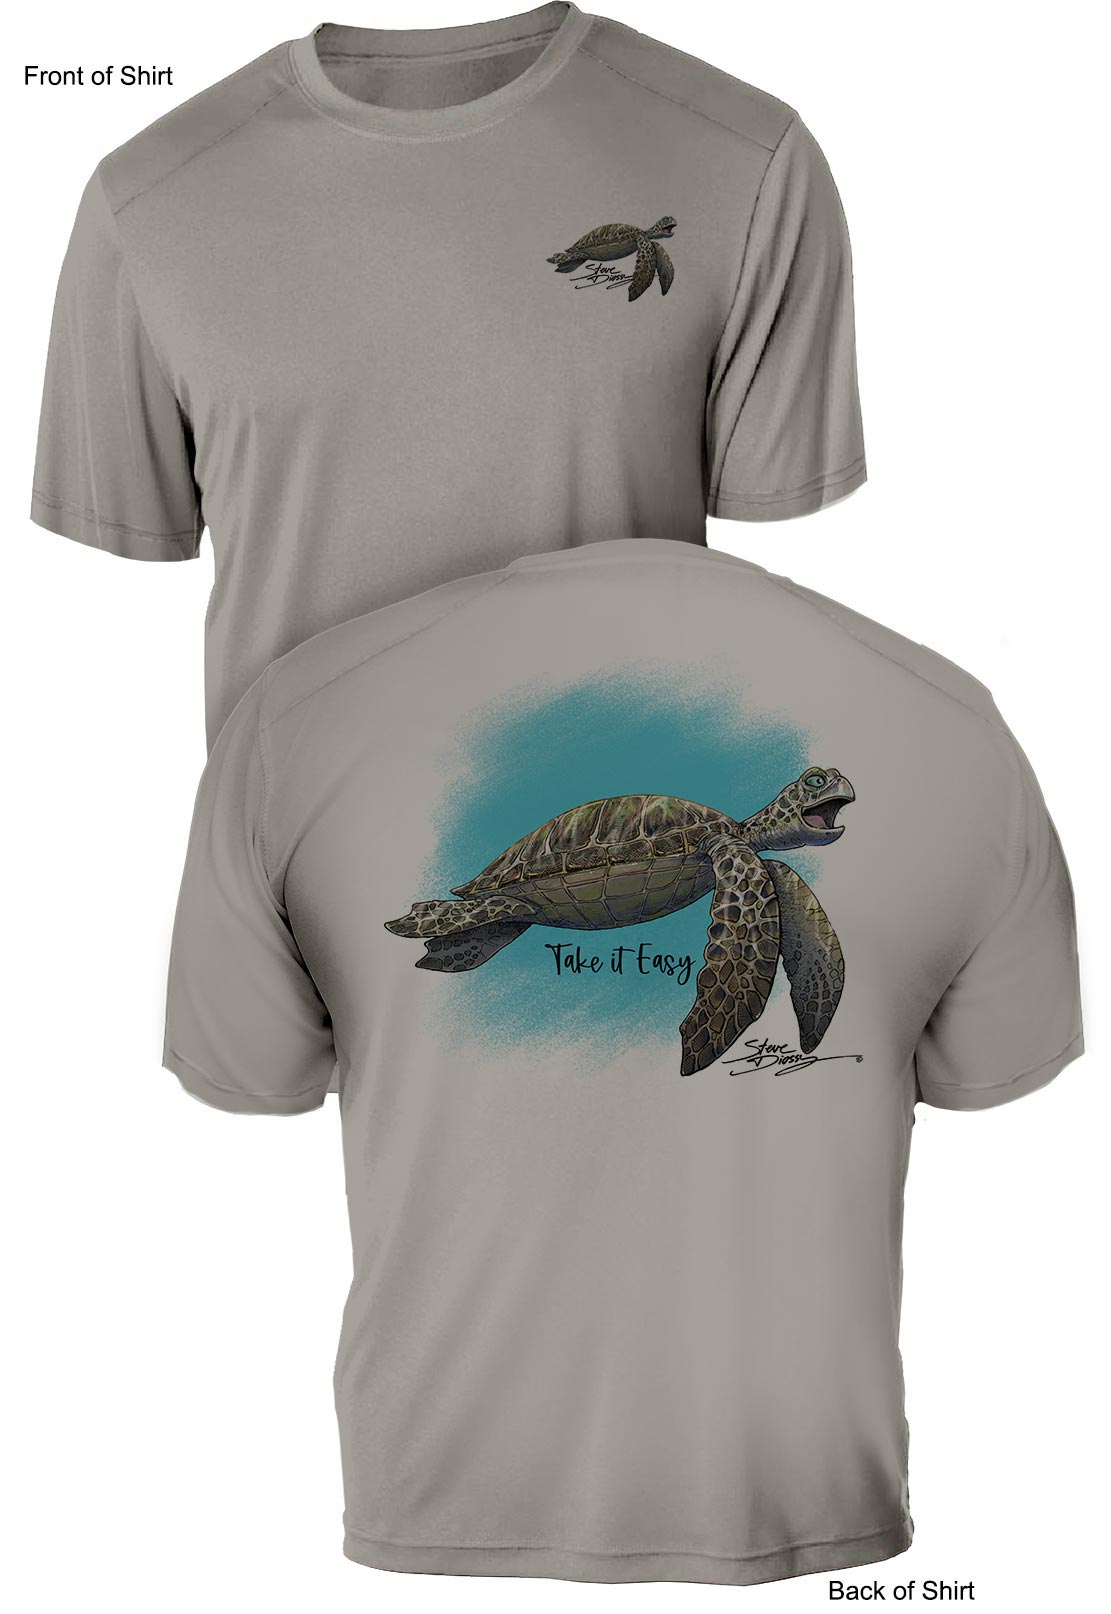 Take It Easy Turtle- UV Sun Protection Shirt - 100% Polyester - Short Sleeve UPF 50